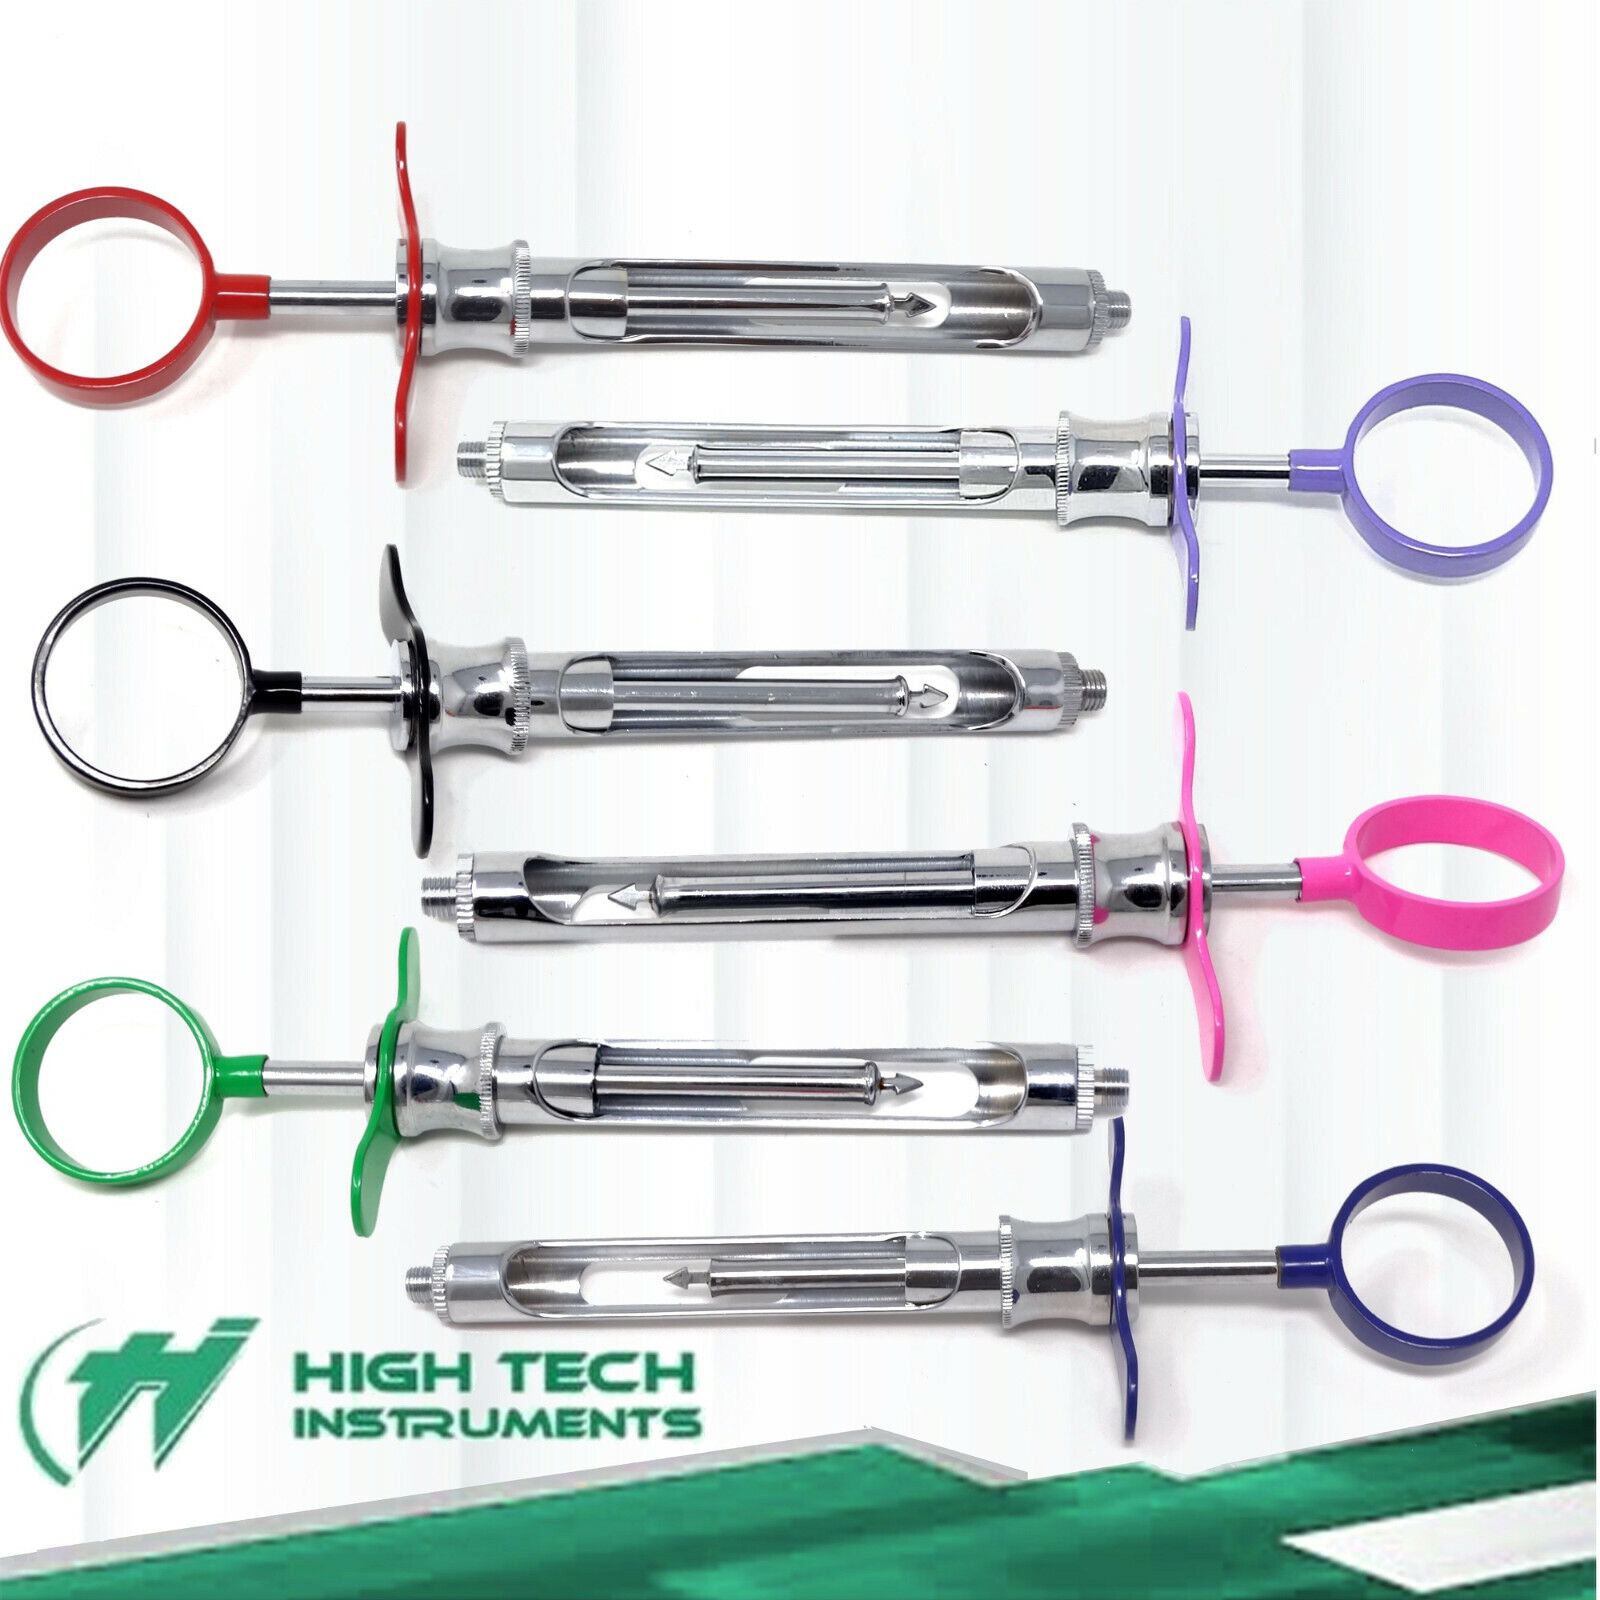 6 Premium Dental Anesthetic Syringe Self-Aspirating 1.8CC-Dental Instruments-A++ HIGH TECH INSTRUMENTS Does Not Apply